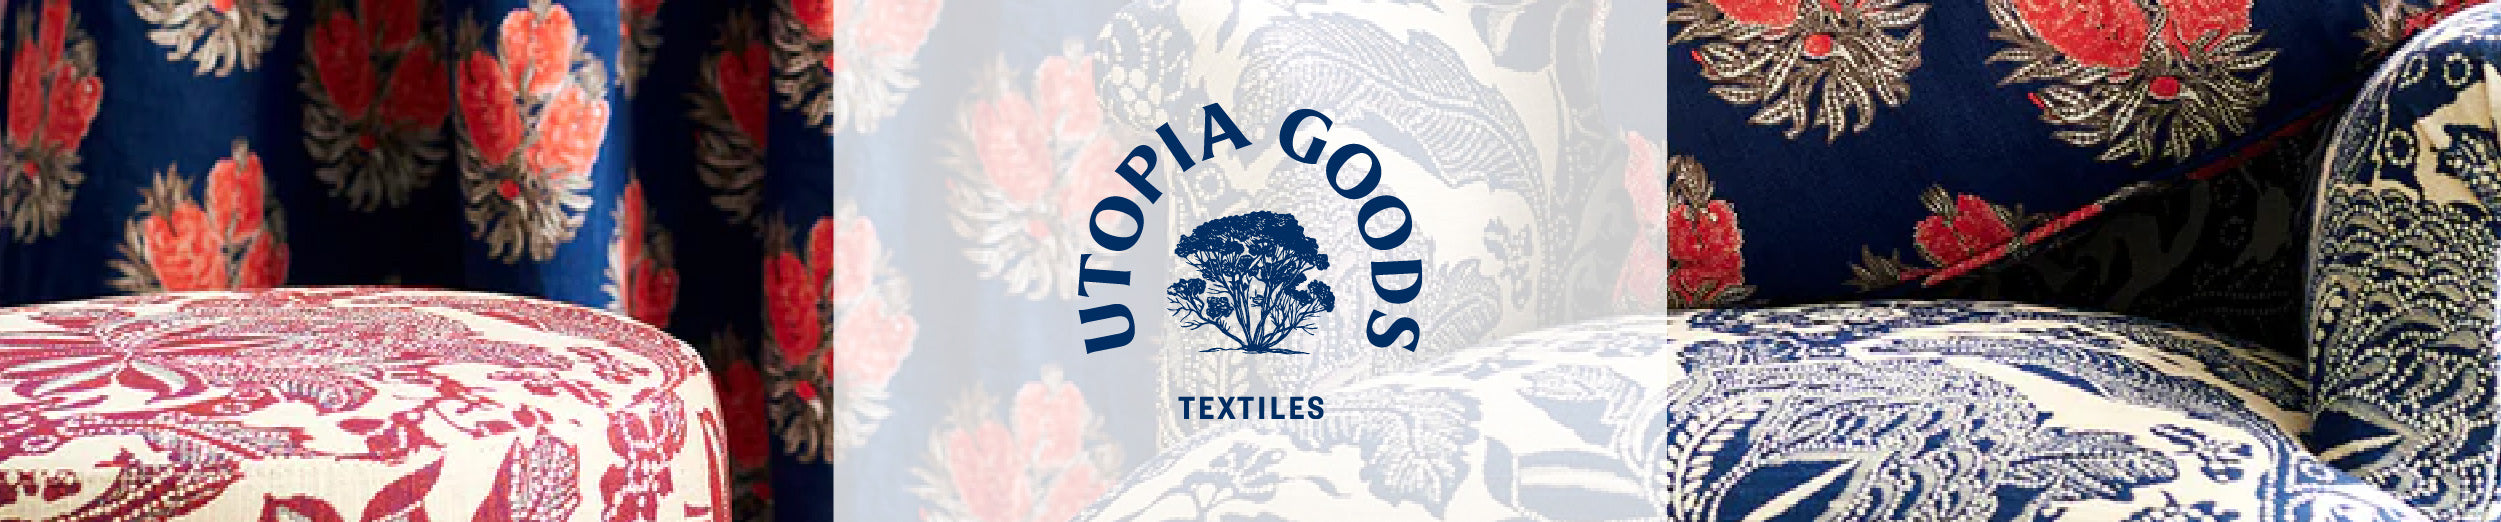 Utopia Goods - Cushions, Tablecloths, Fabrics and Textiles